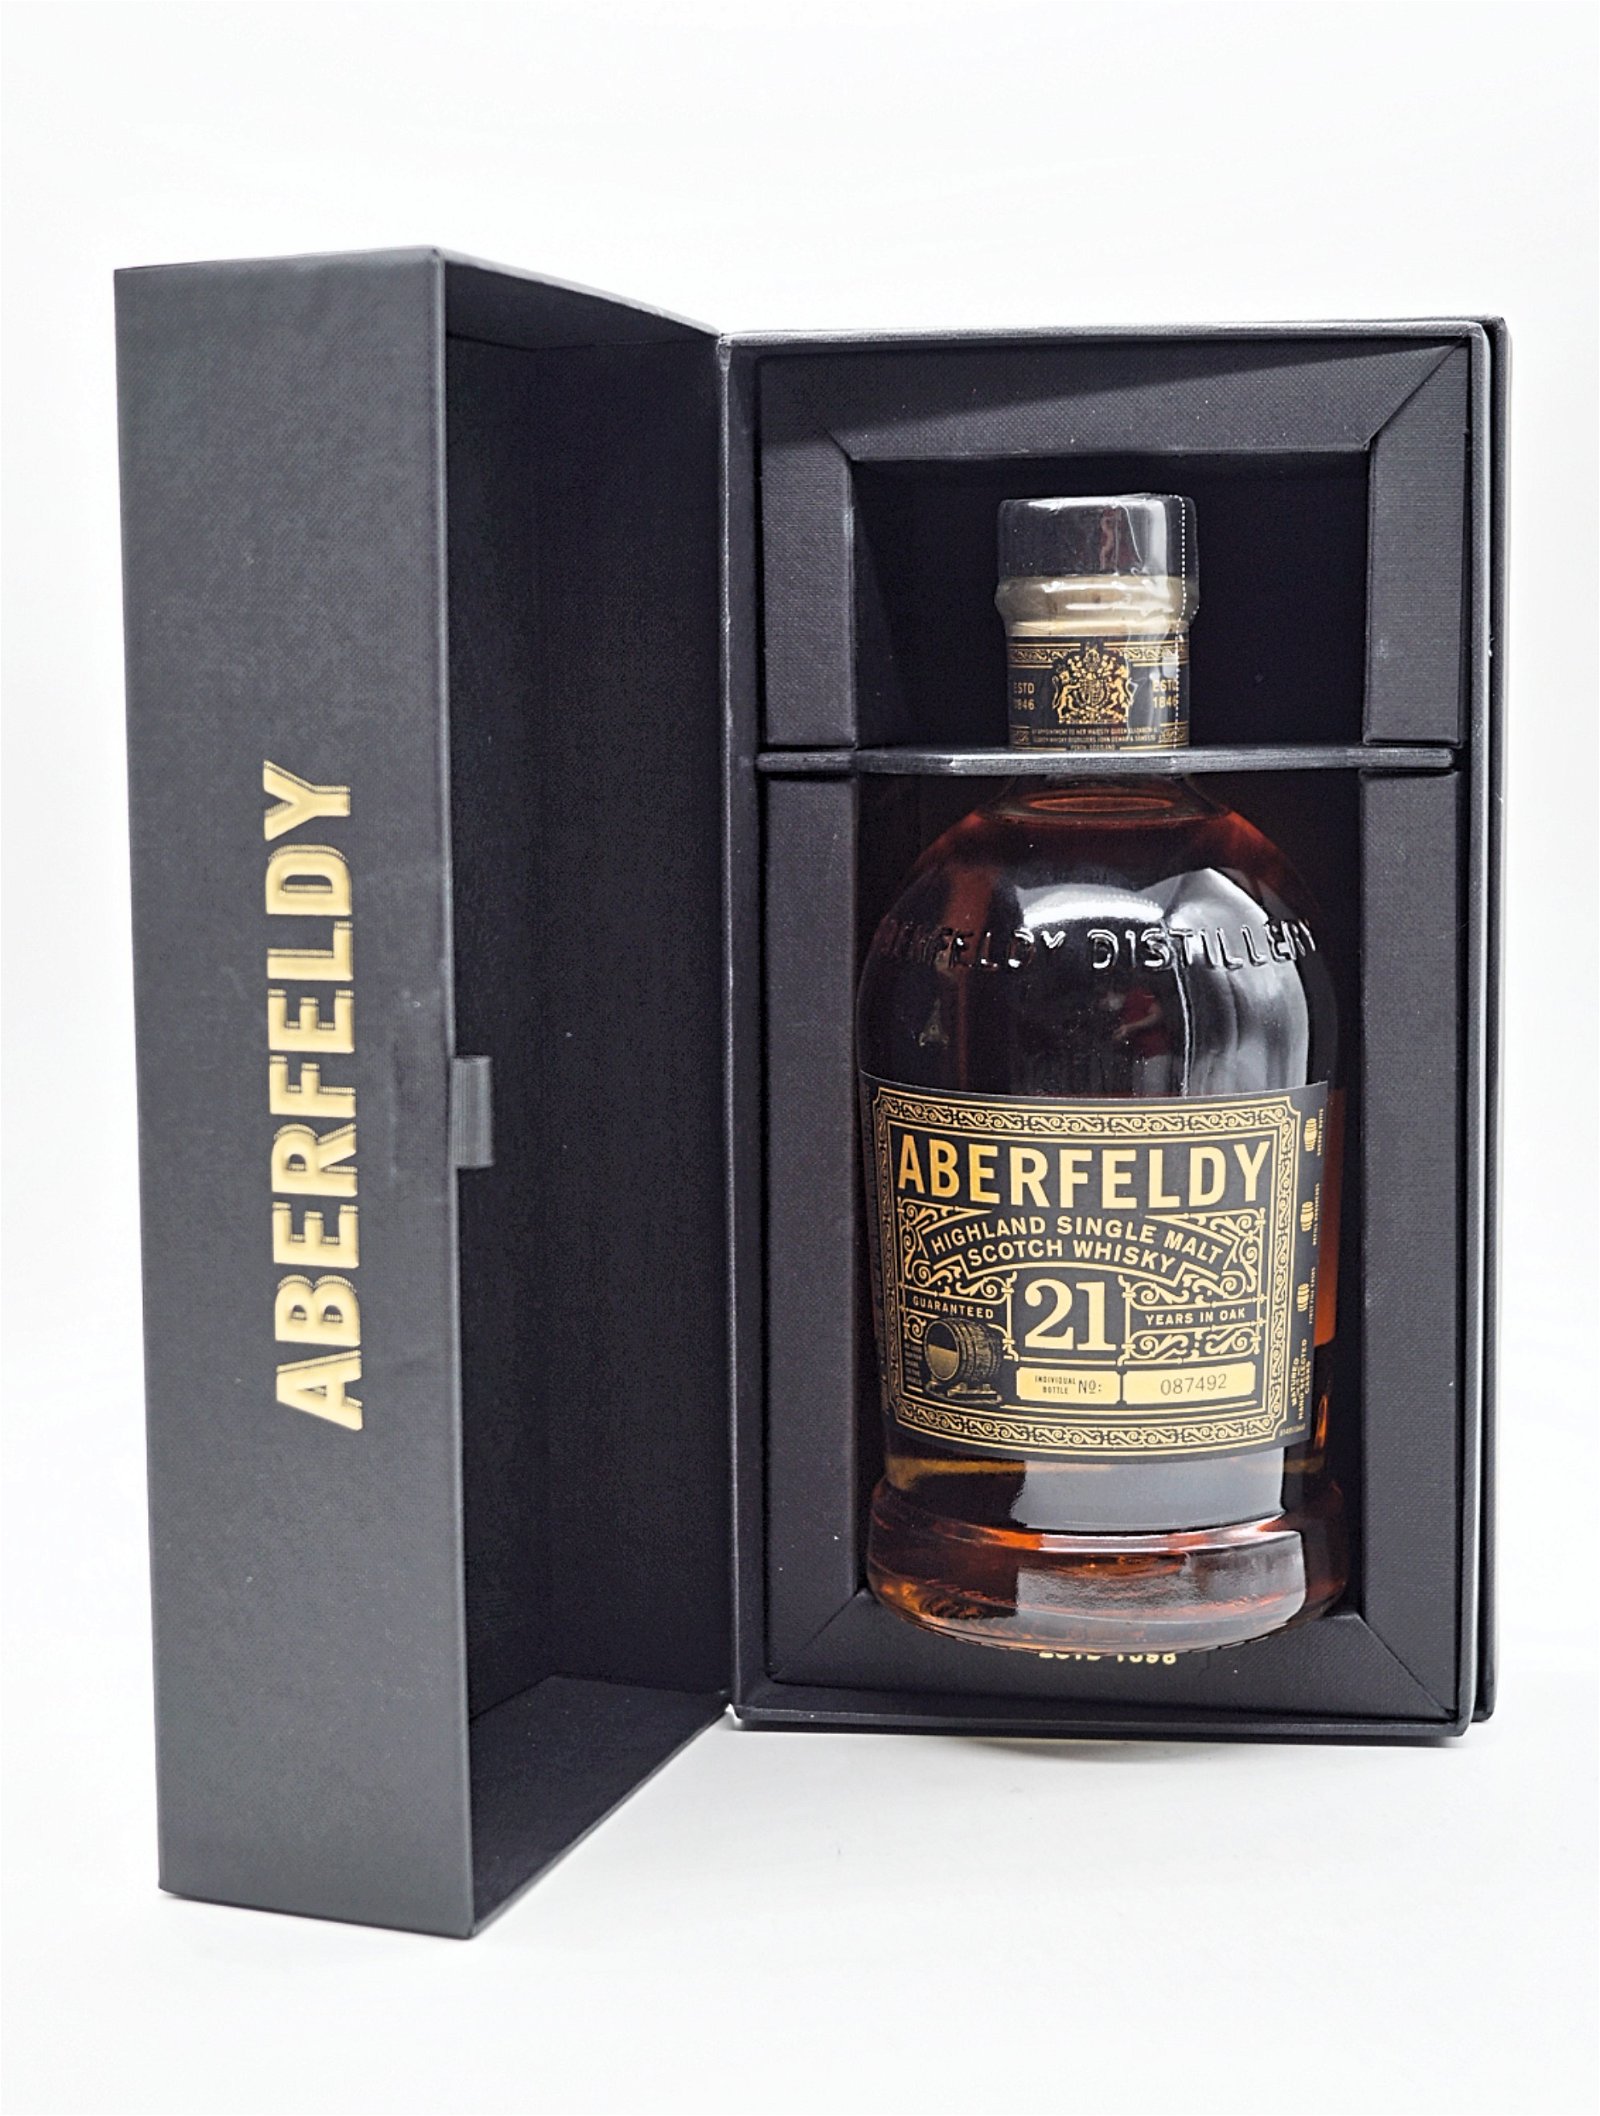 Aberfeldy 21 Jahre Highland Singe Malt Scotch Whisky